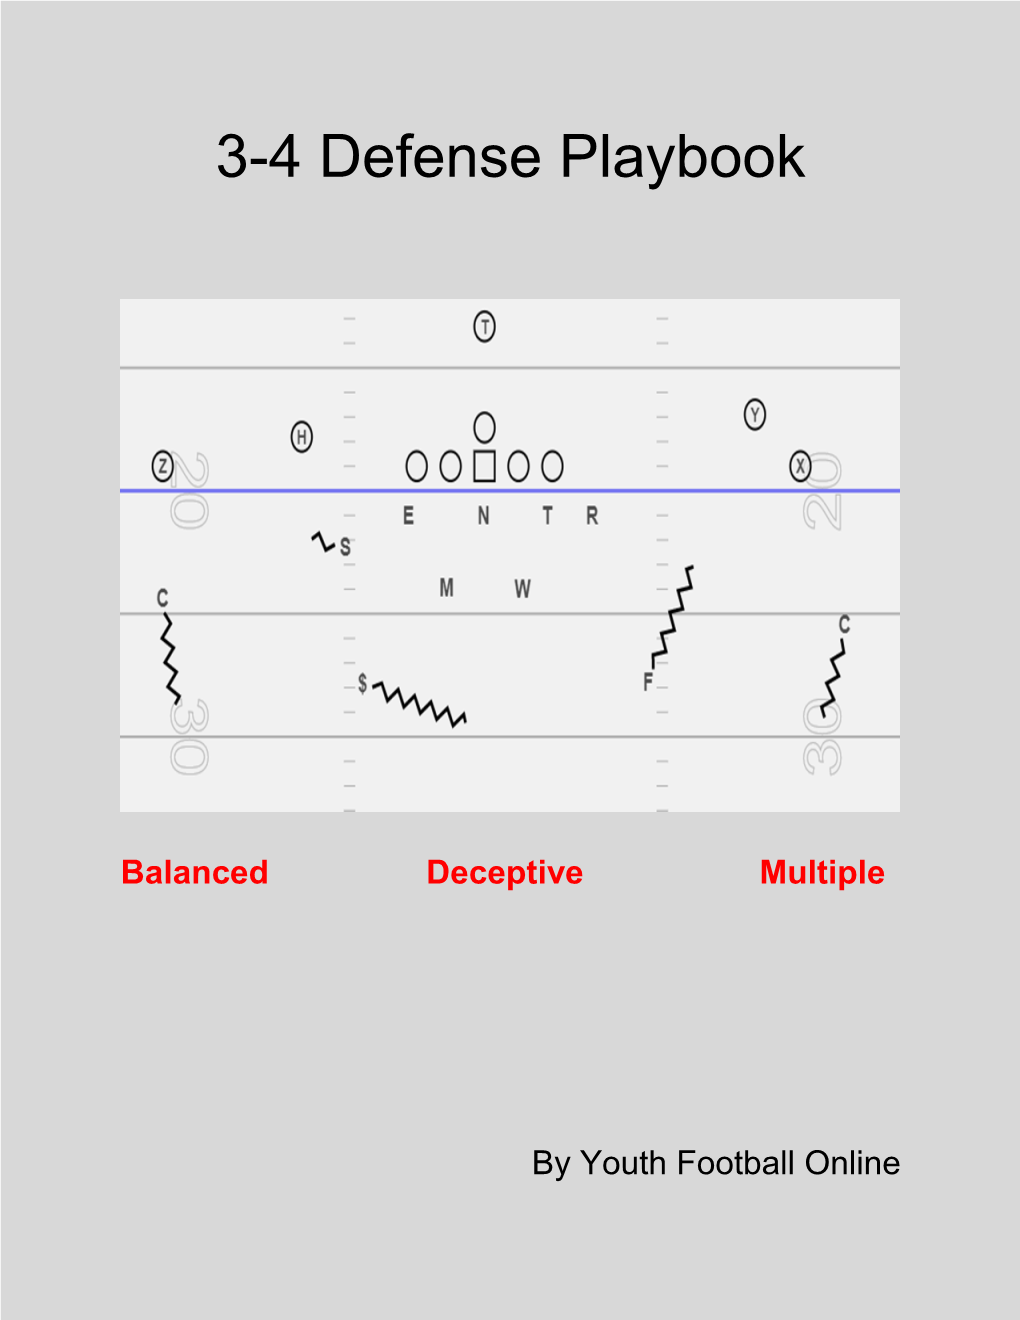 3-4 Defense Playbook